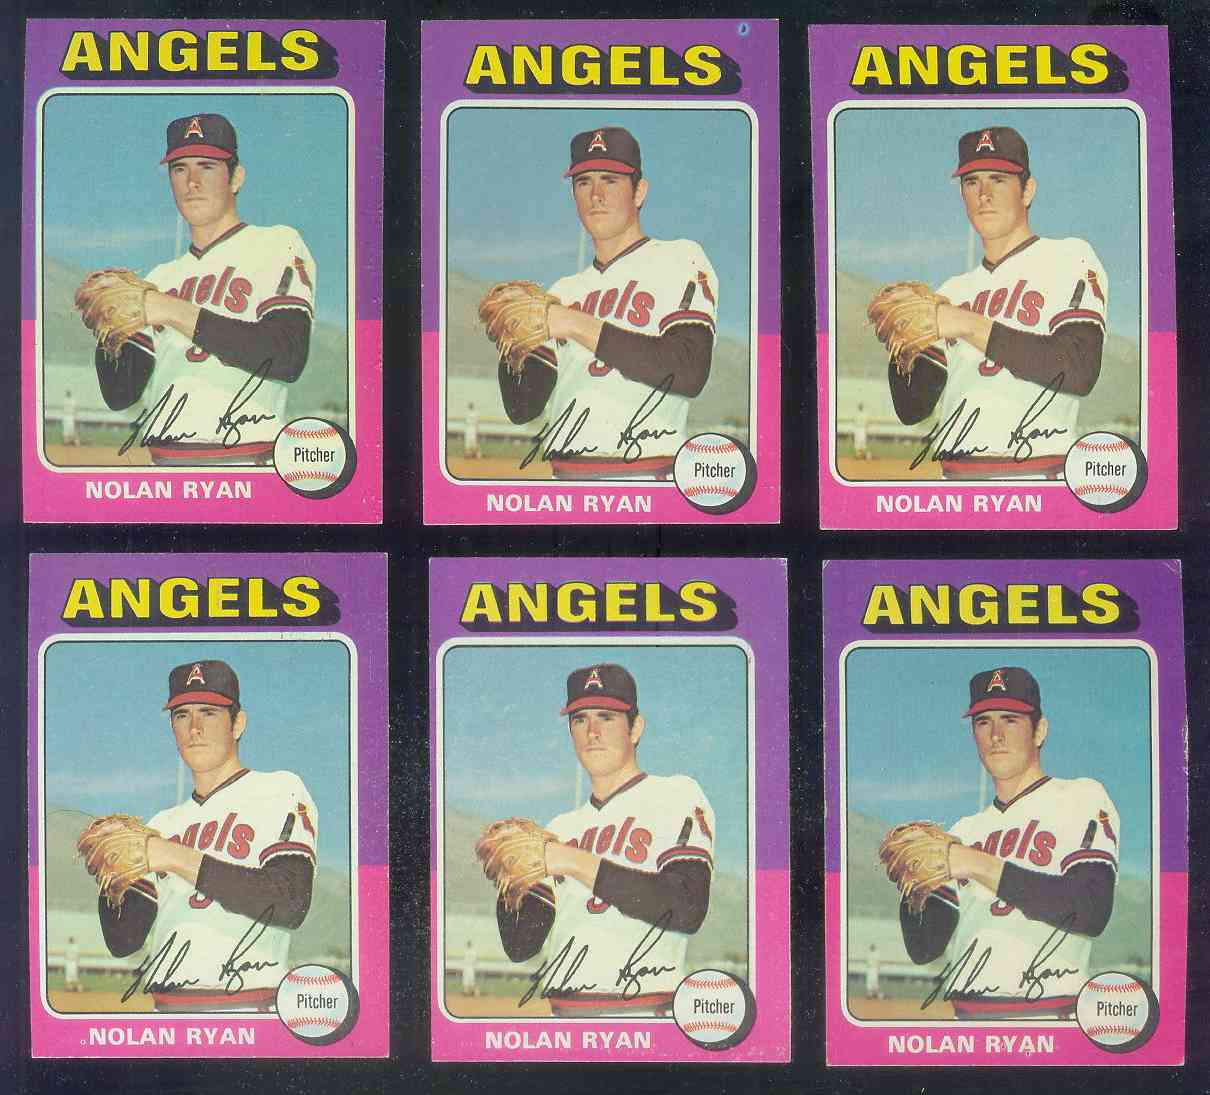 1975 Topps #500 Nolan Ryan [#] (Angels) Baseball cards value